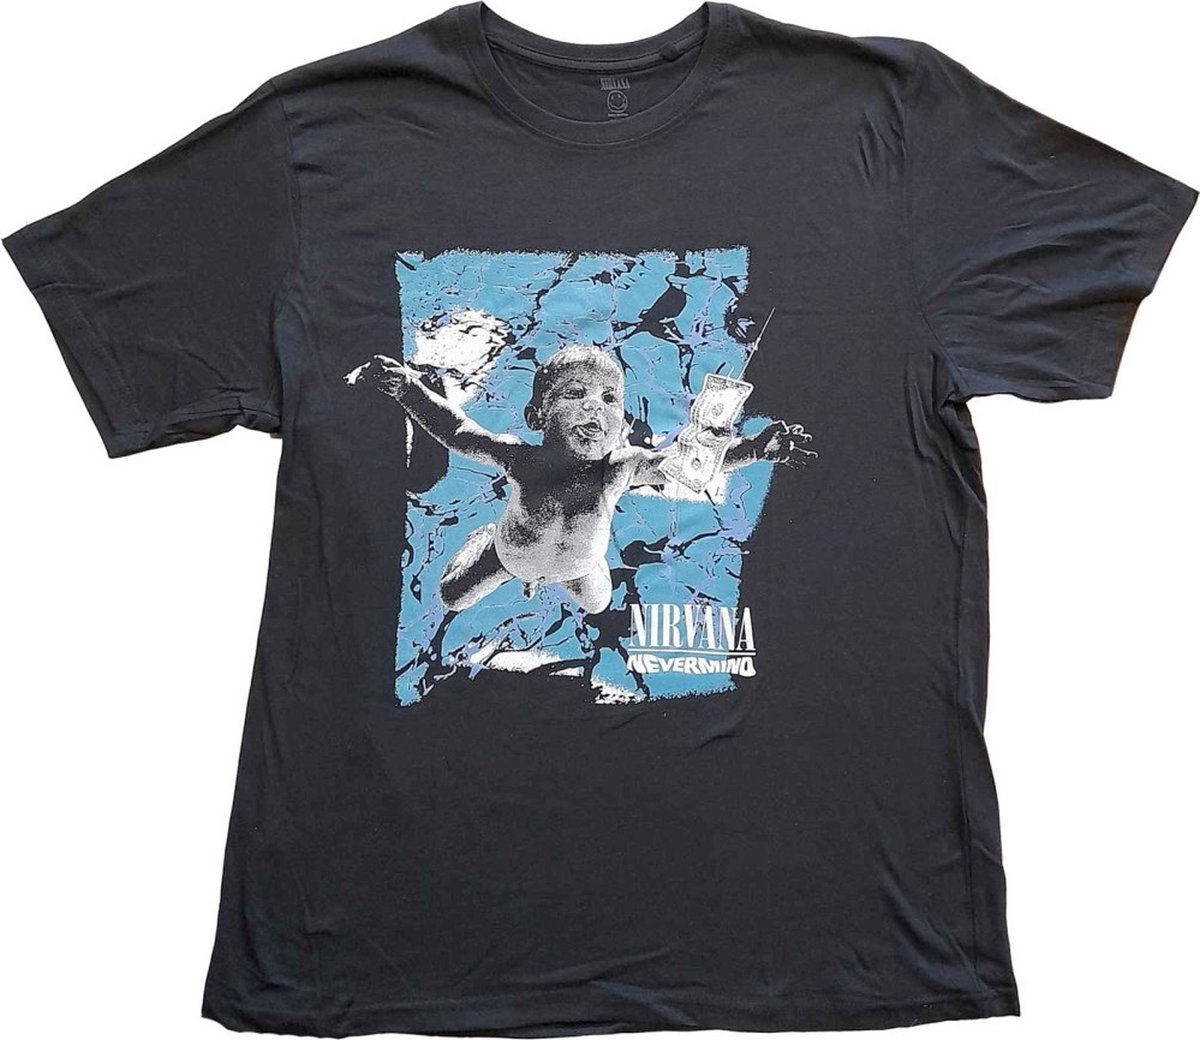 Nirvana - Nevermind Cracked Heren T-shirt - M - Zwart